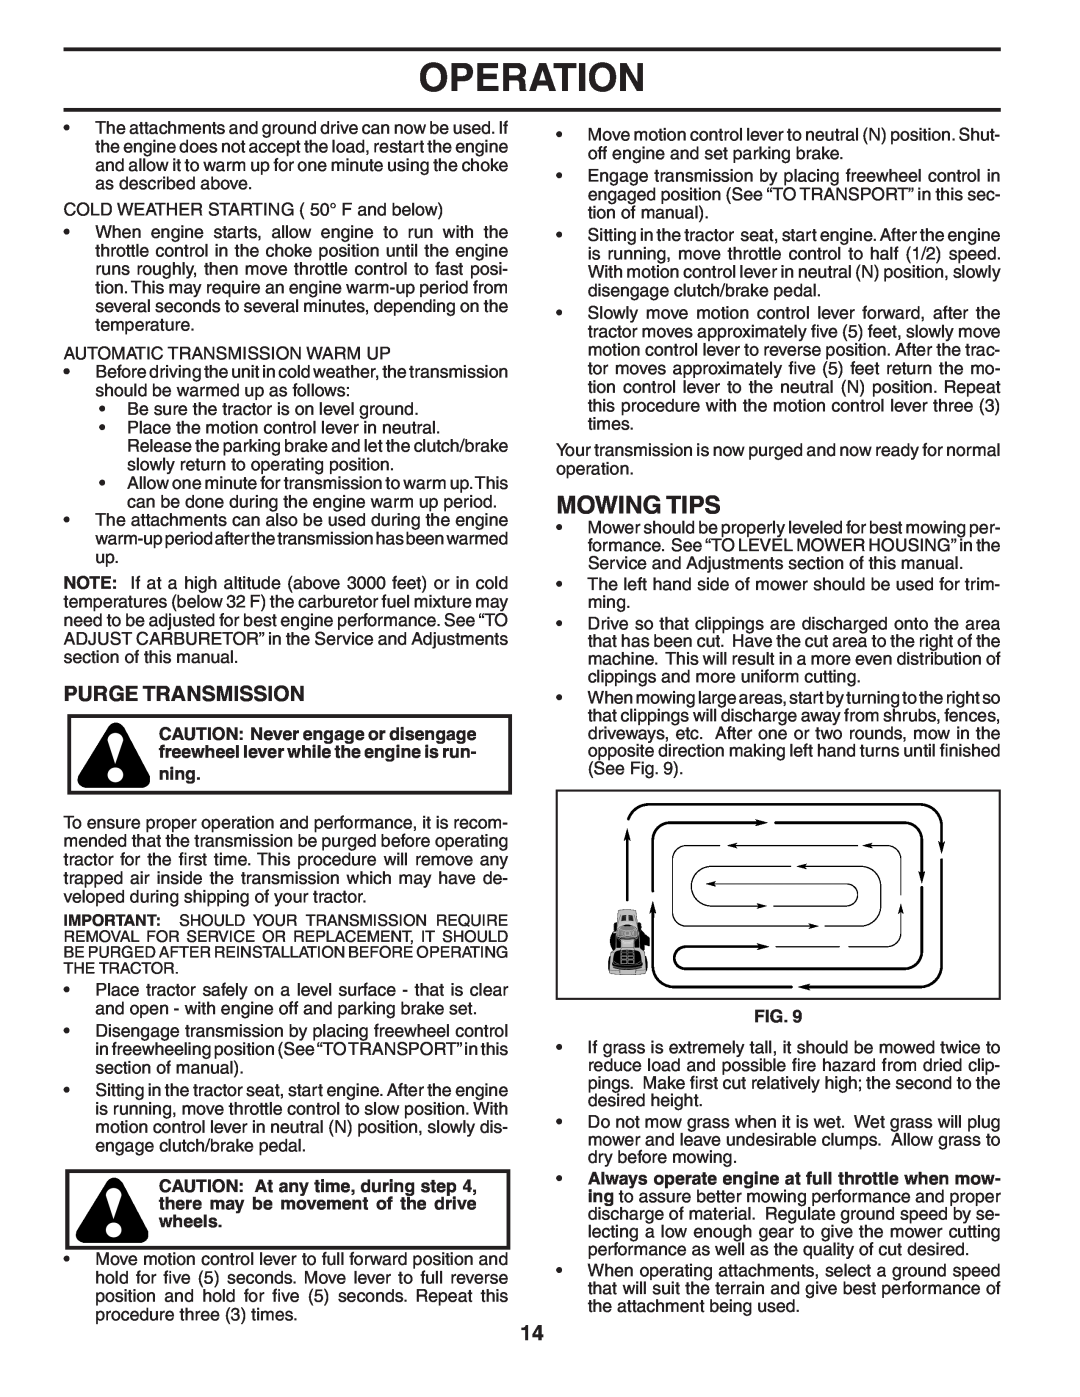 Poulan PB185H42LT manual Mowing Tips, Purge Transmission, Operation 